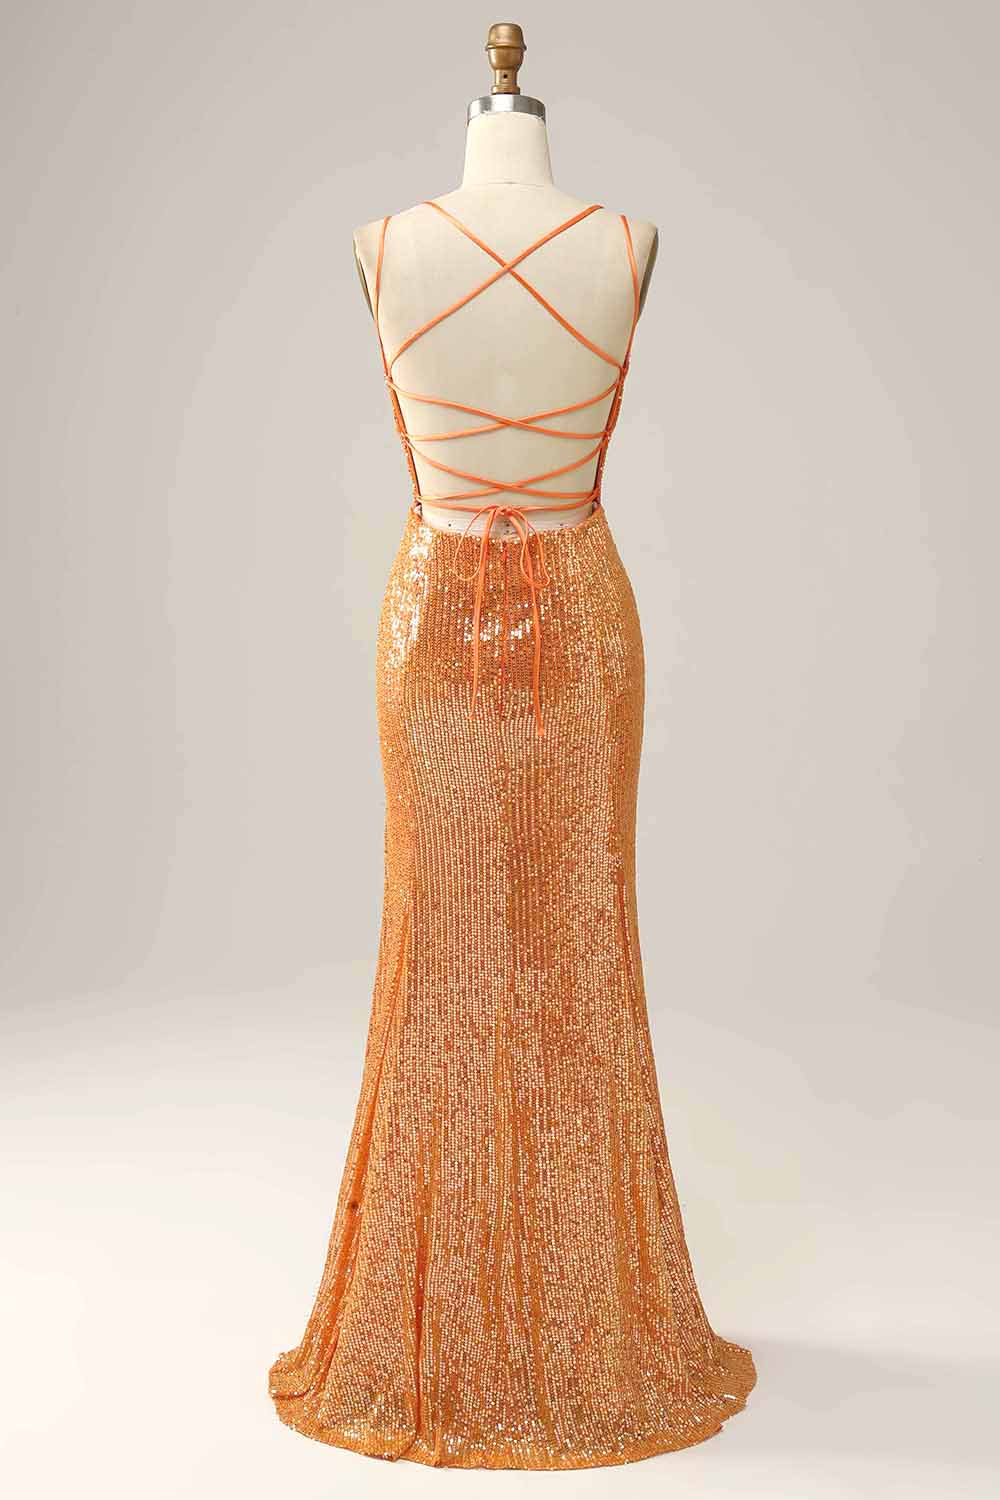 Women's Mermai Prom Dress U.S. Warehouse Stock Clearance - Only $49.9